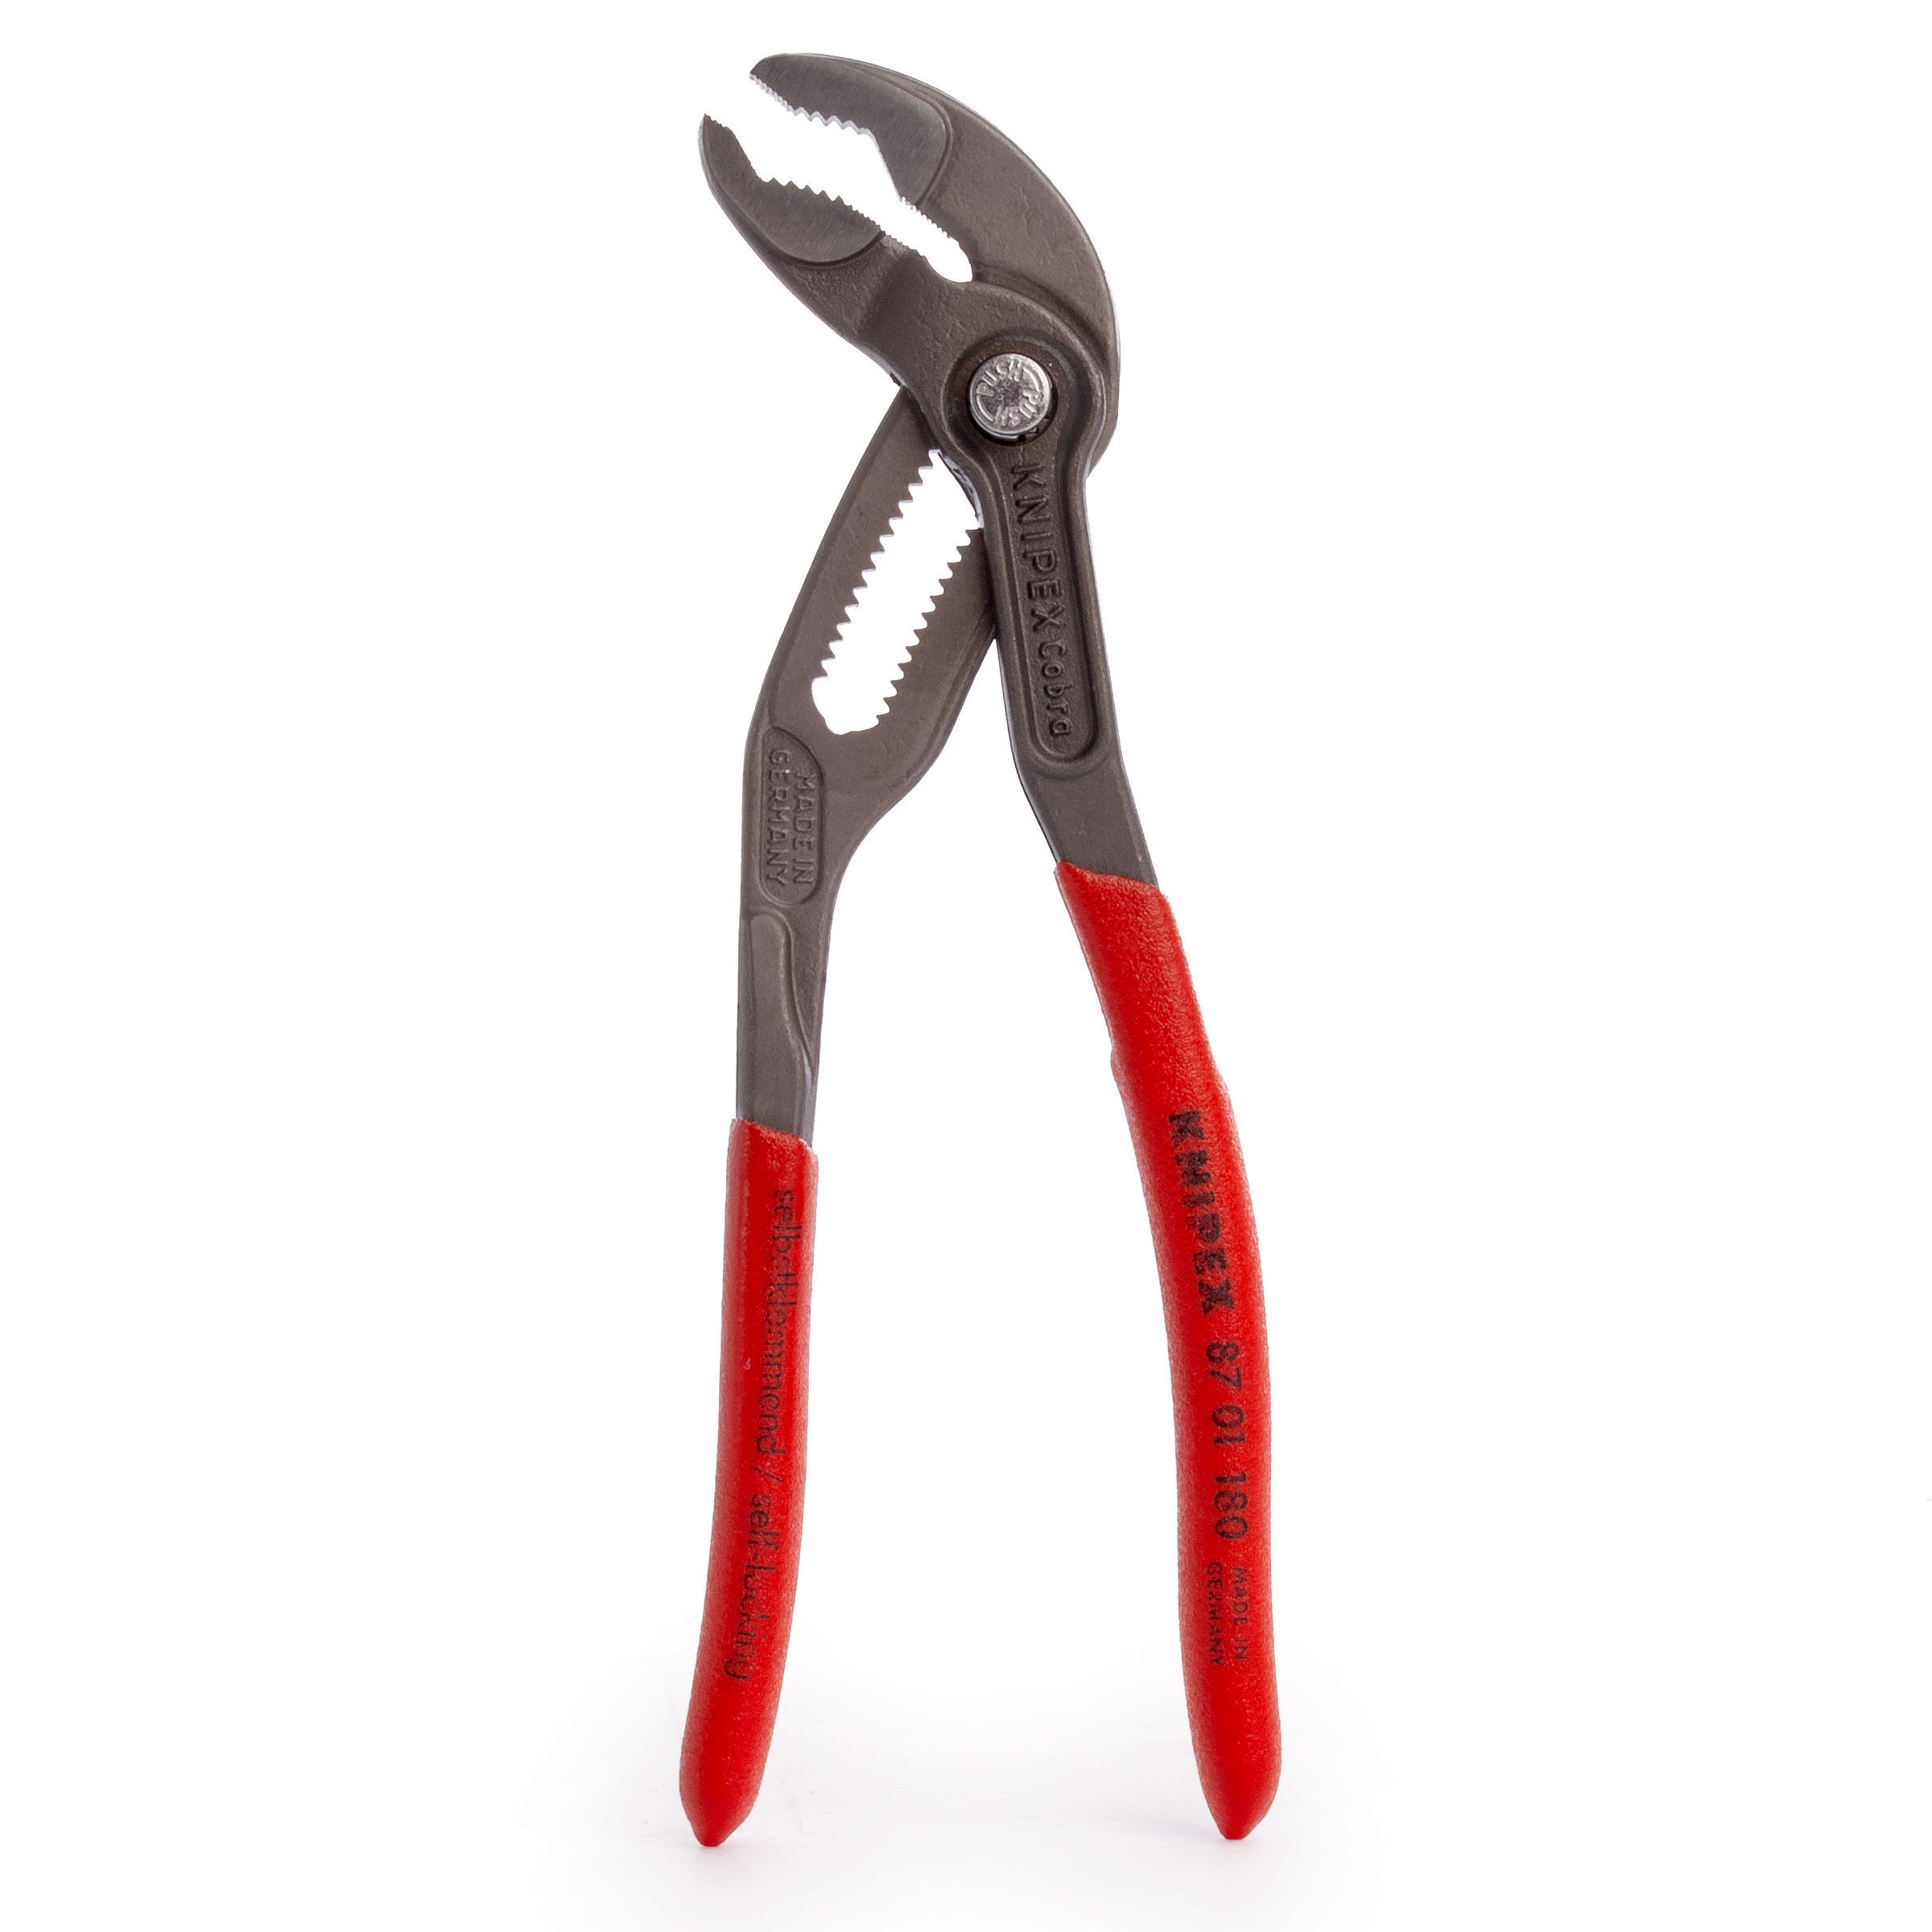 Tools that bite! Meet the KNIPEX Cobra® range